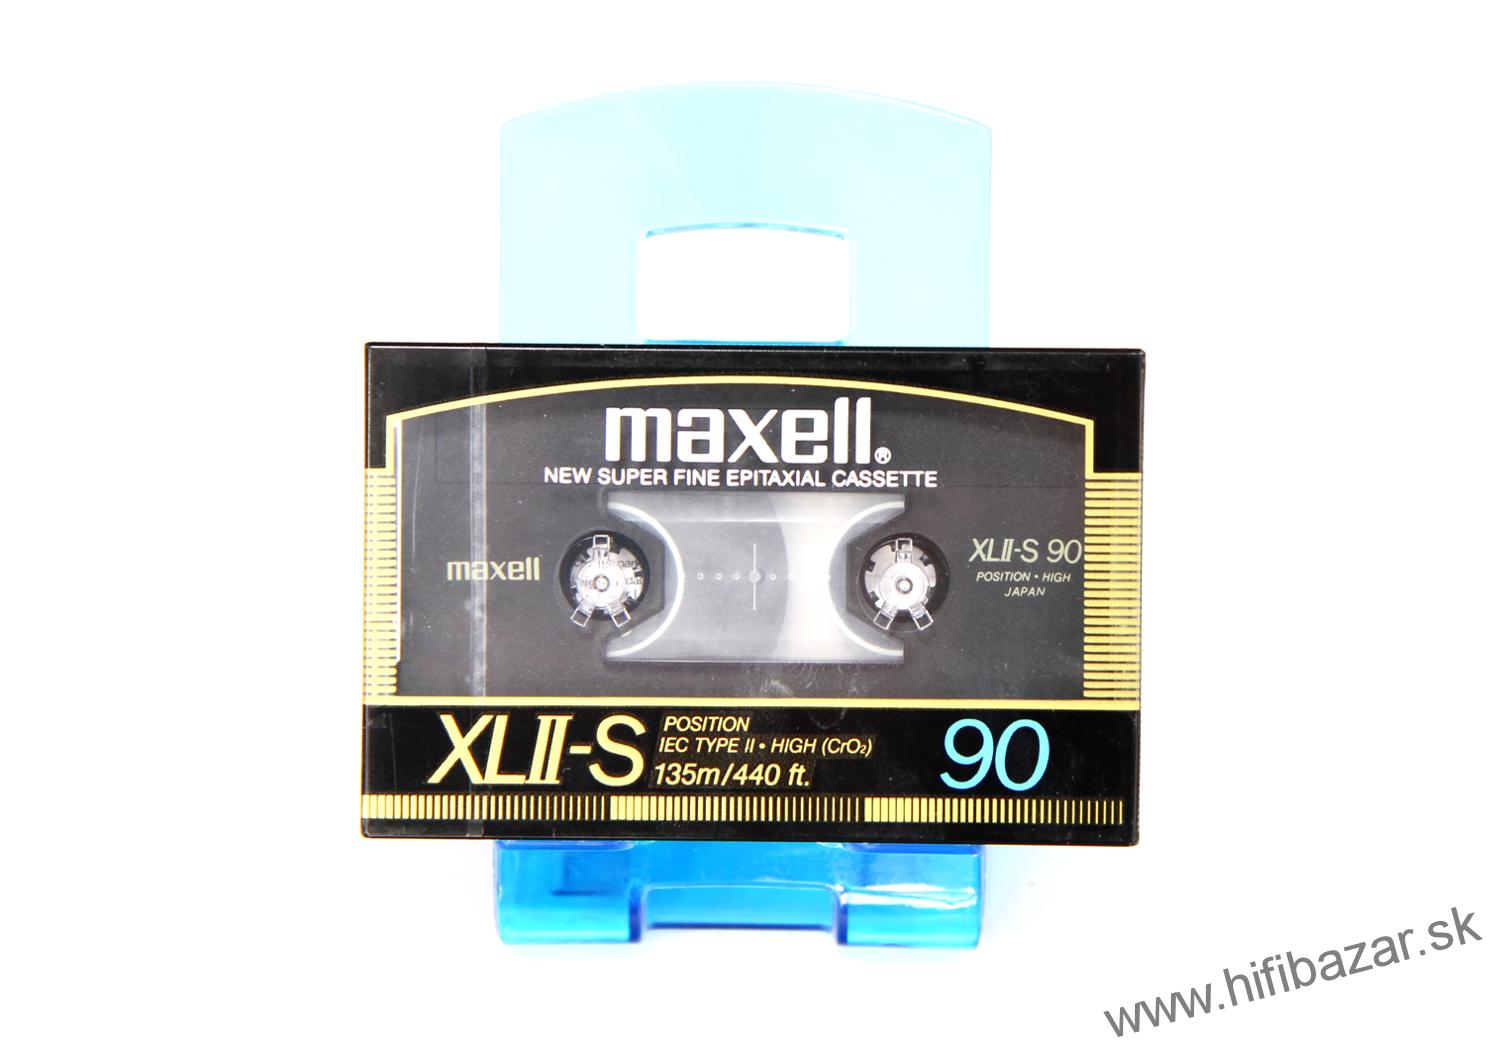 MAXELL XLII-S90 Fine Epitaxial